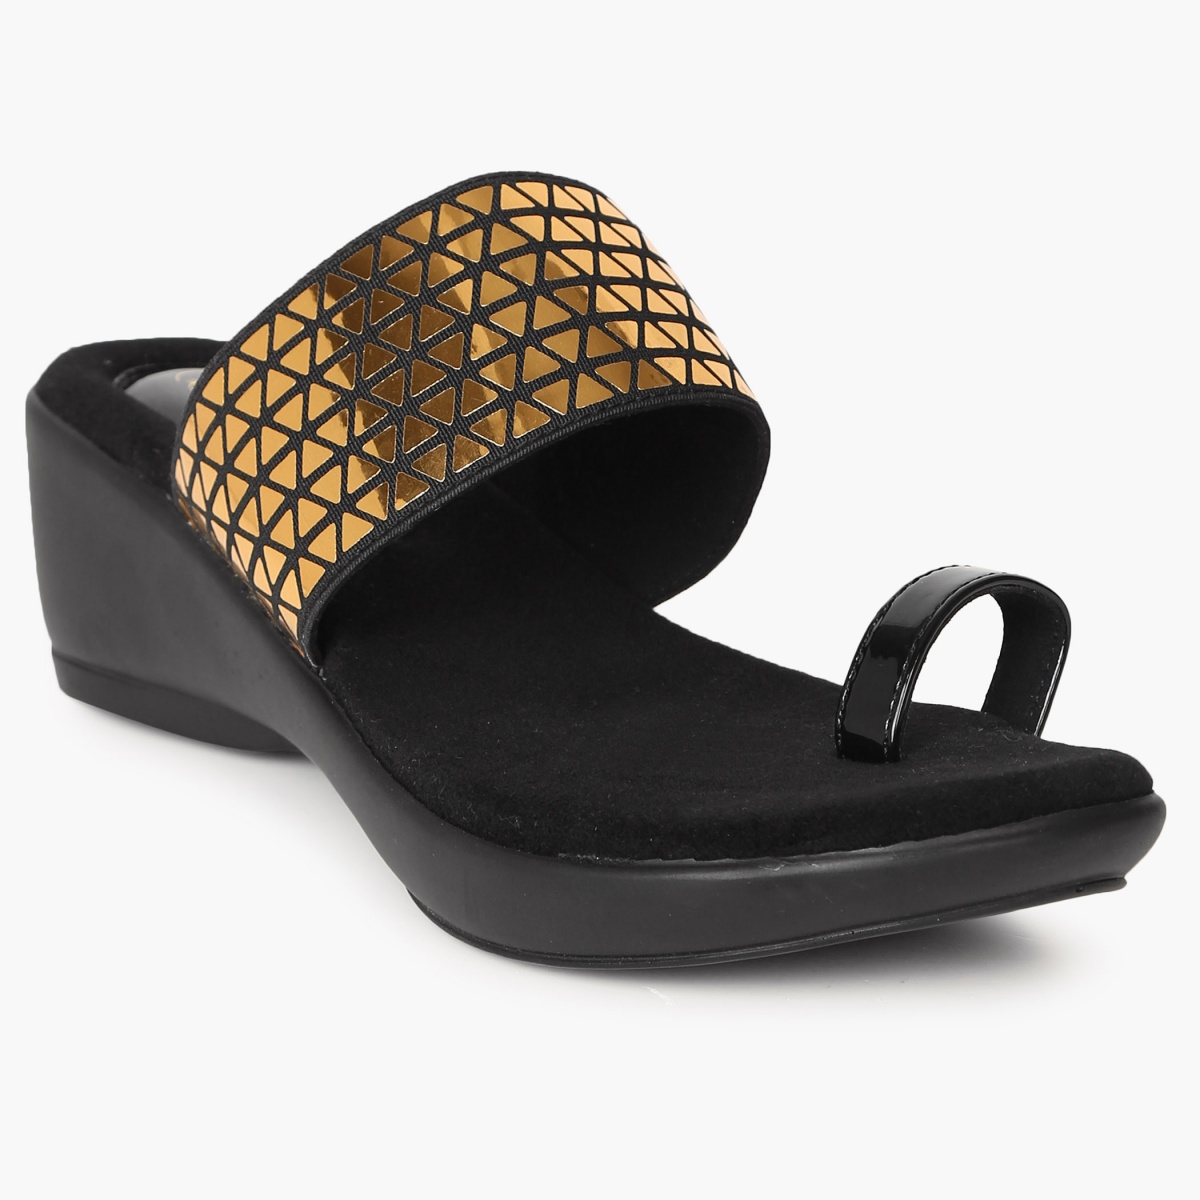 CATWALK Geometric Metallic Wedge Sandals